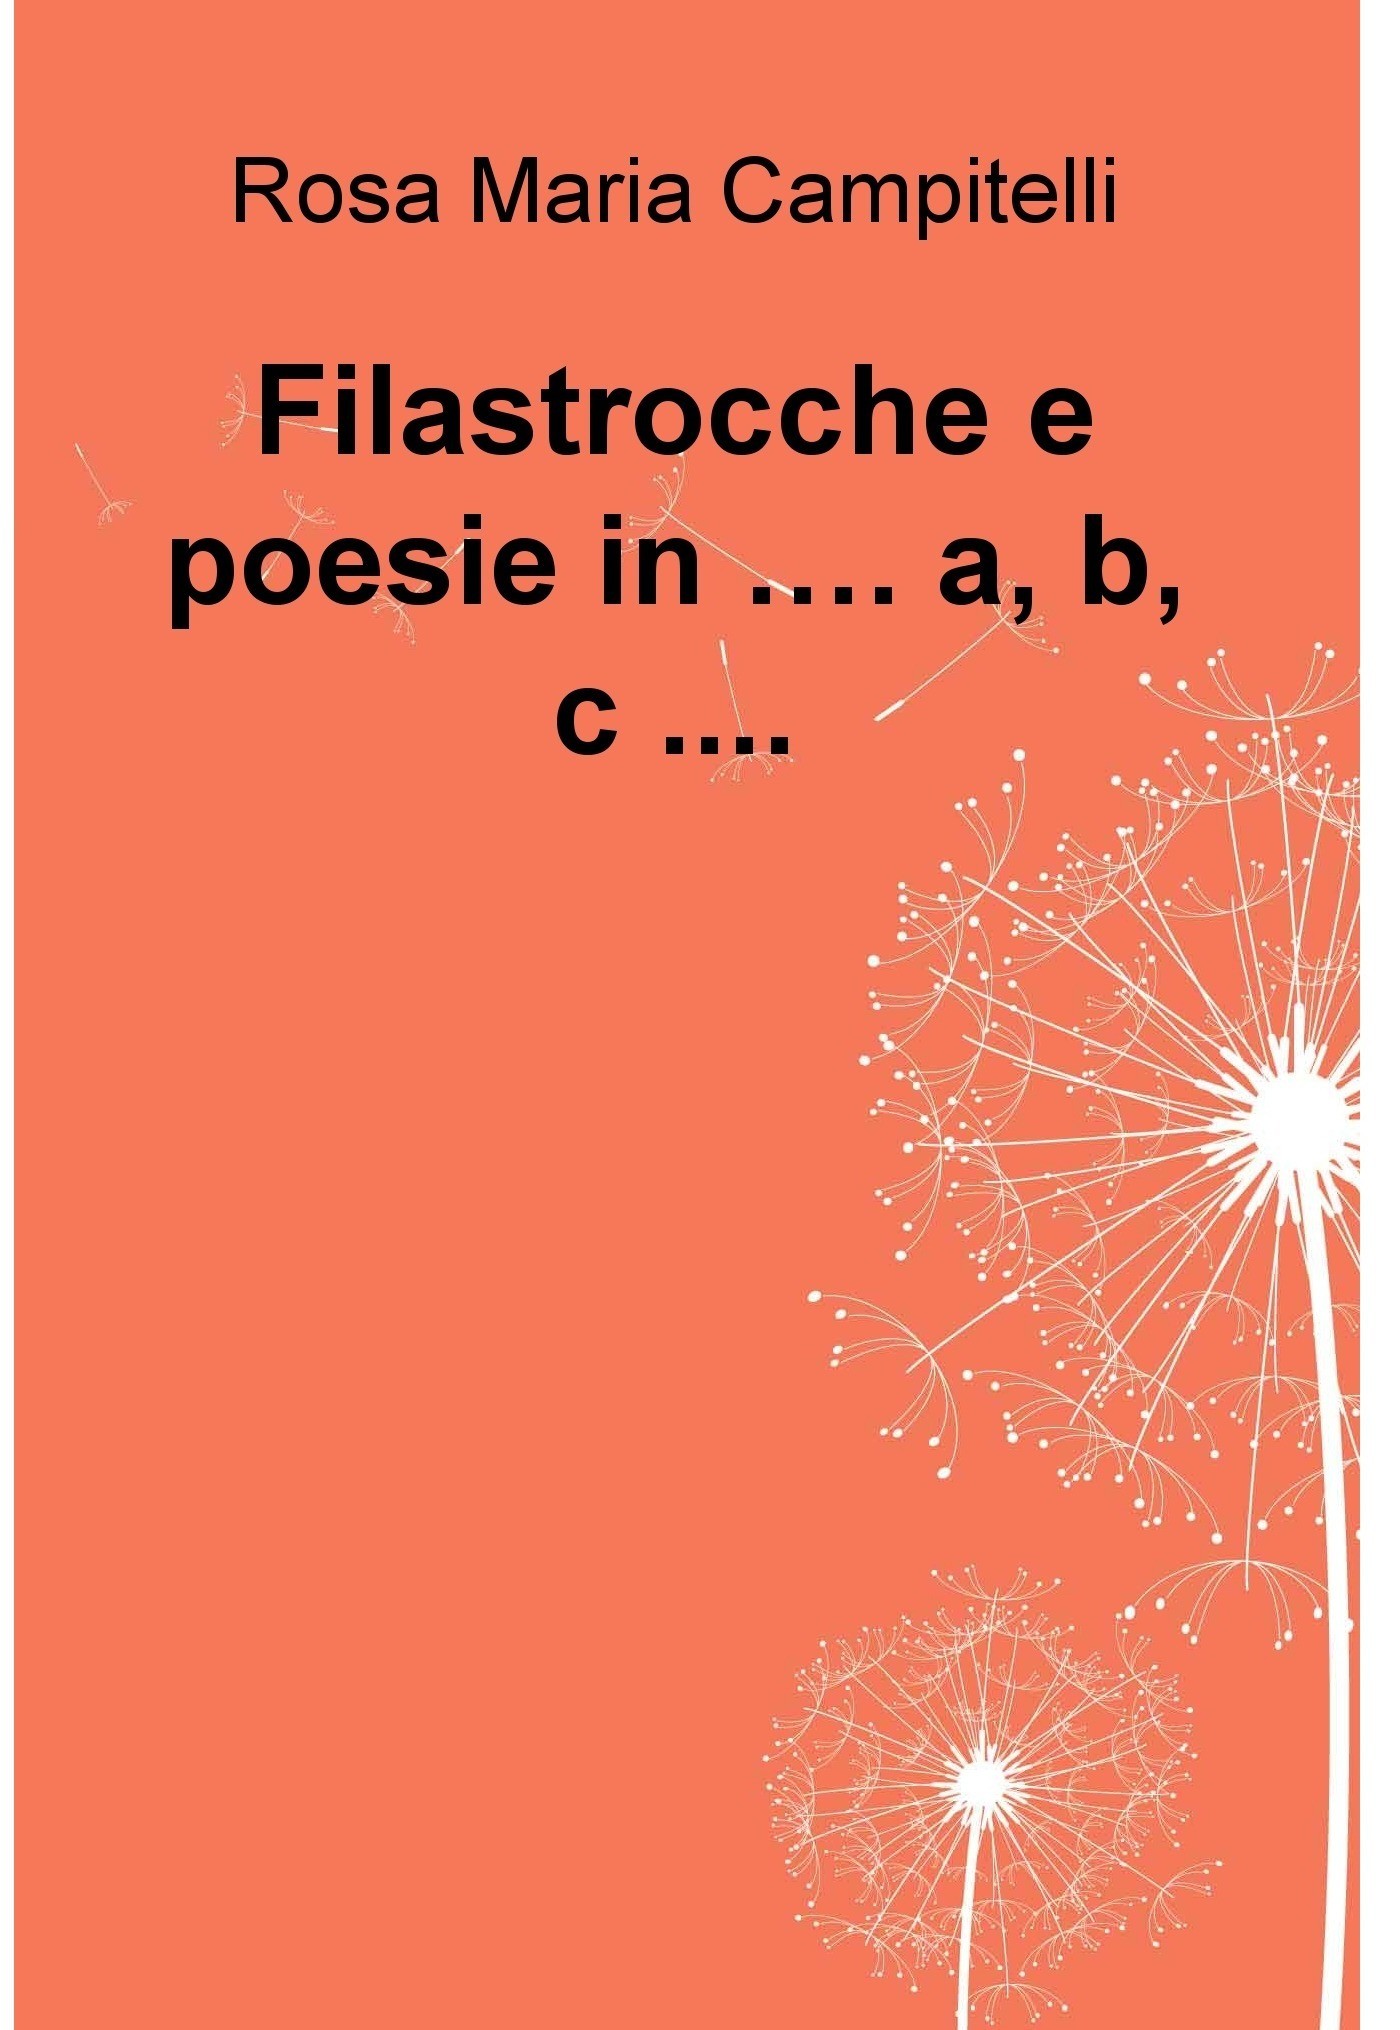 Filastrocche e poesie in …. a, b, c .... - Librerie.coop